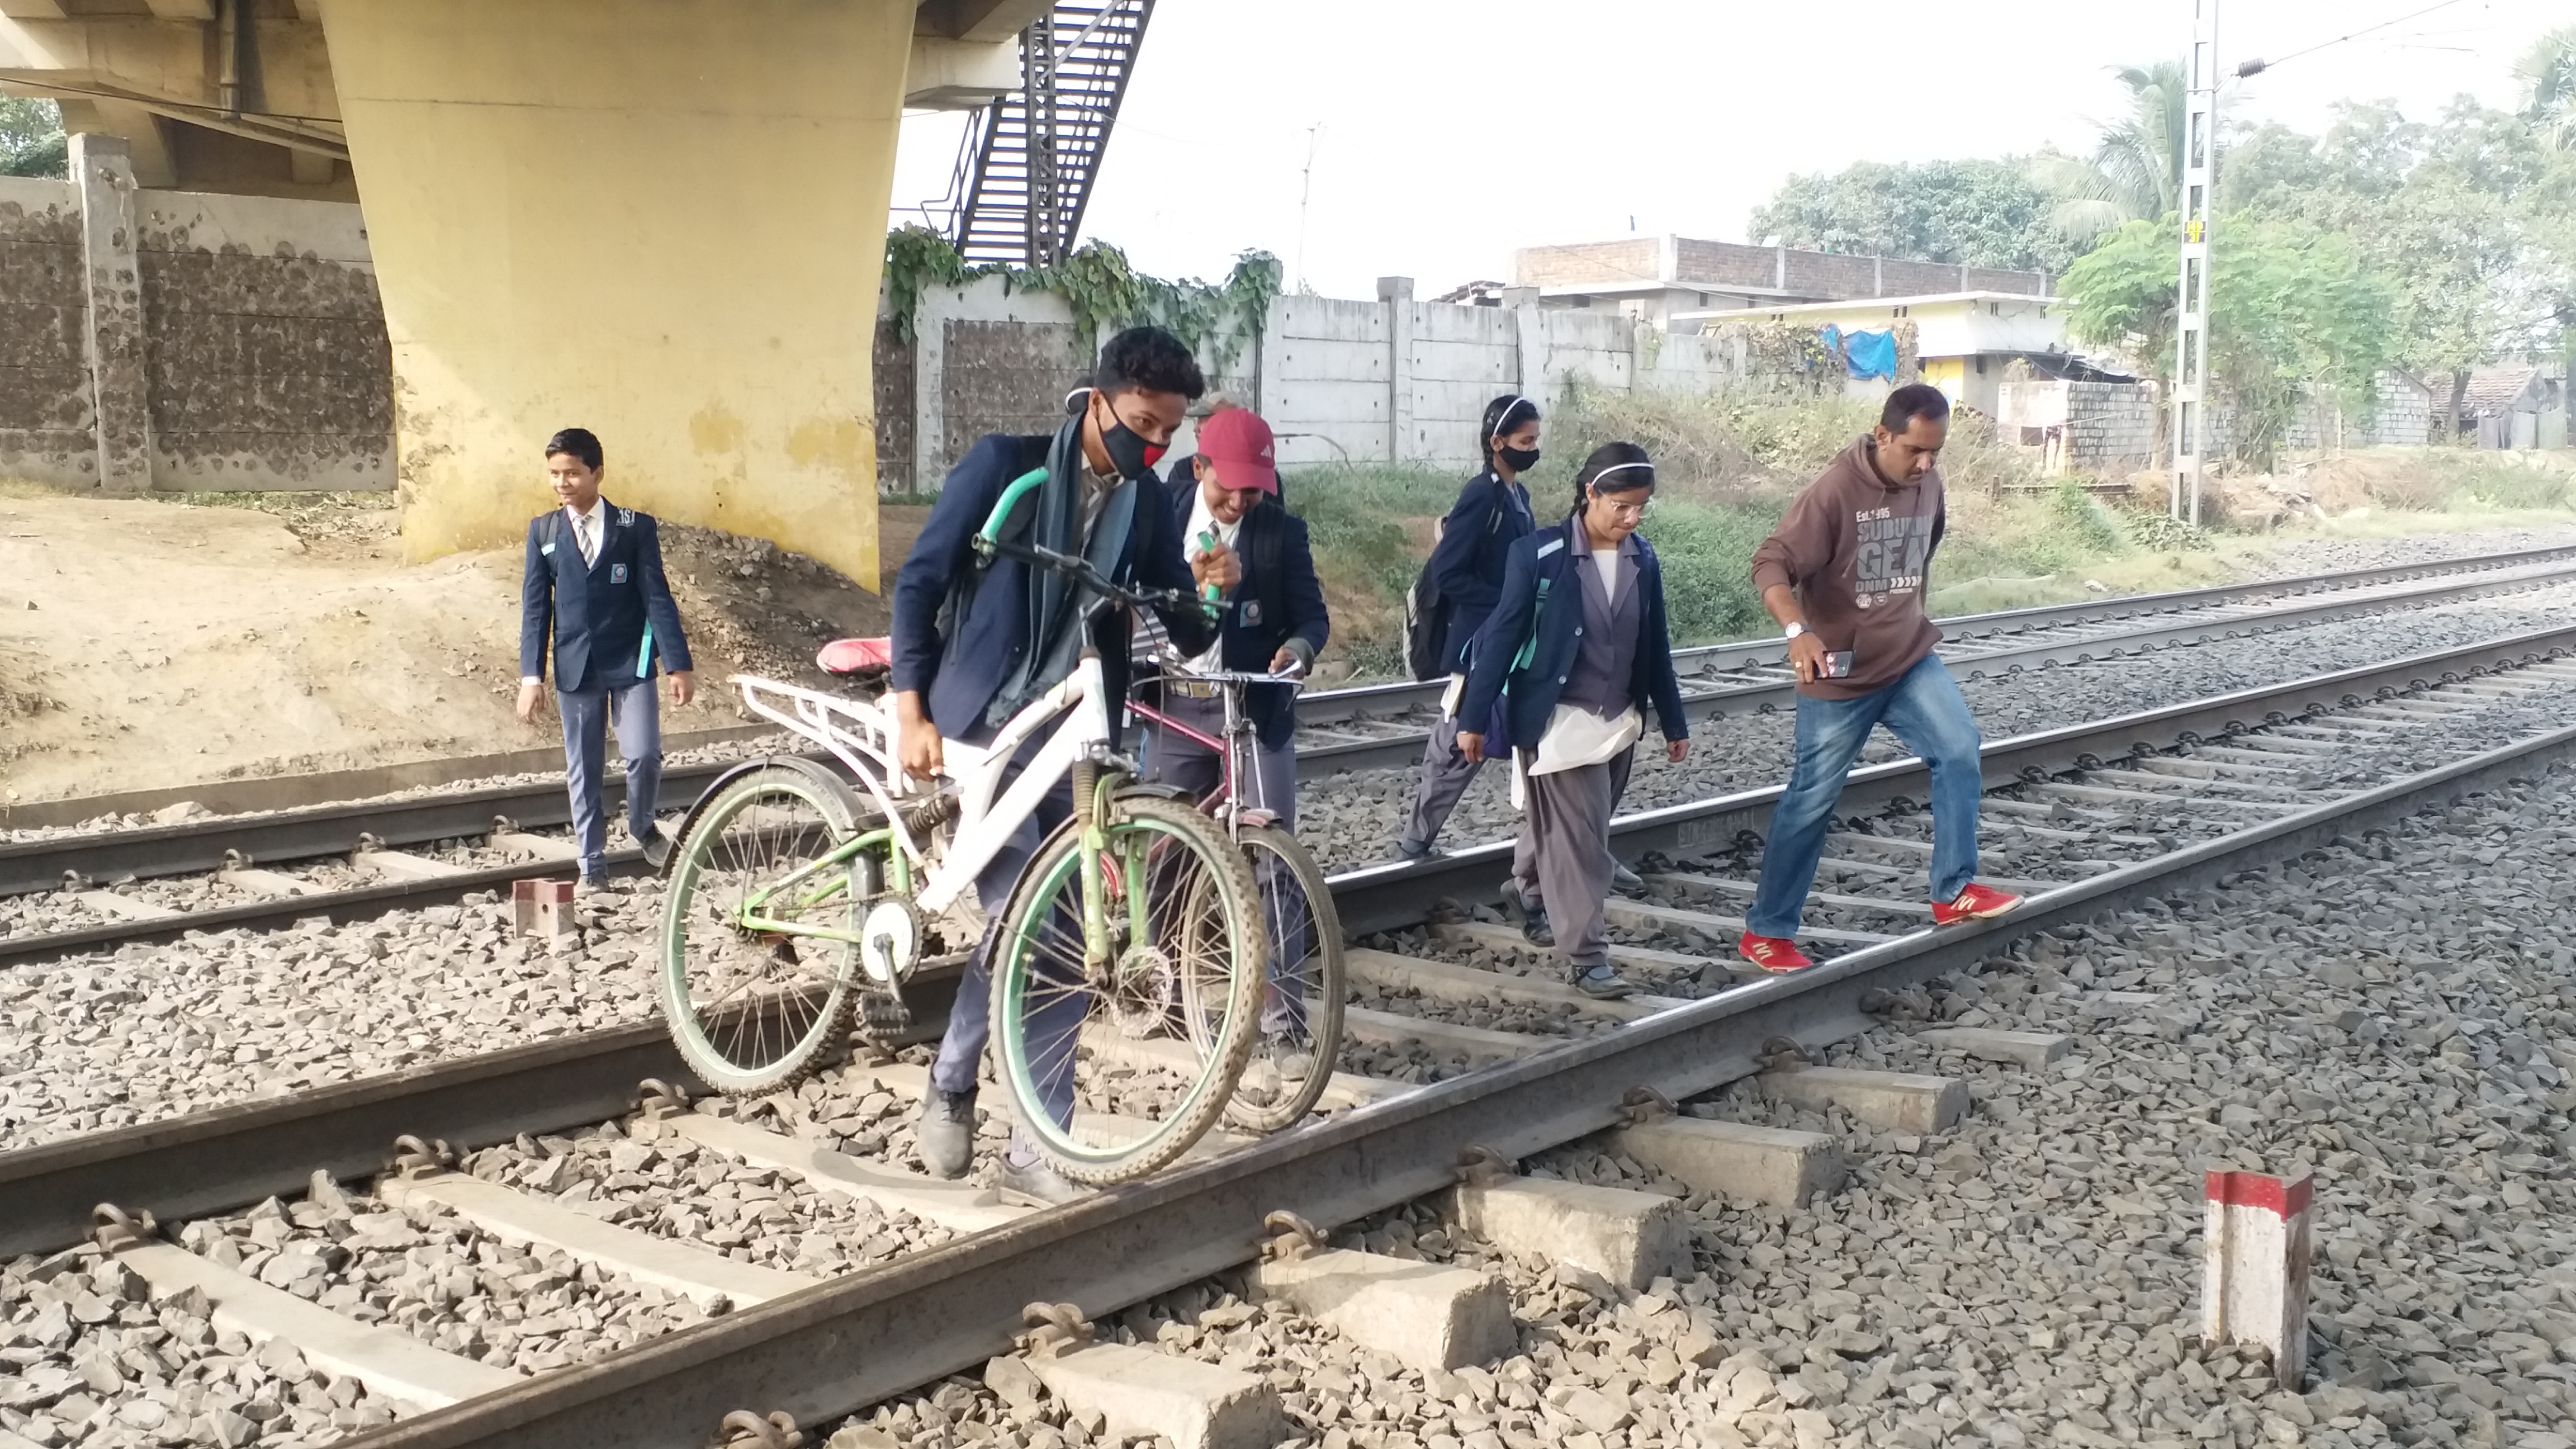 Children go to school by crossing railway track